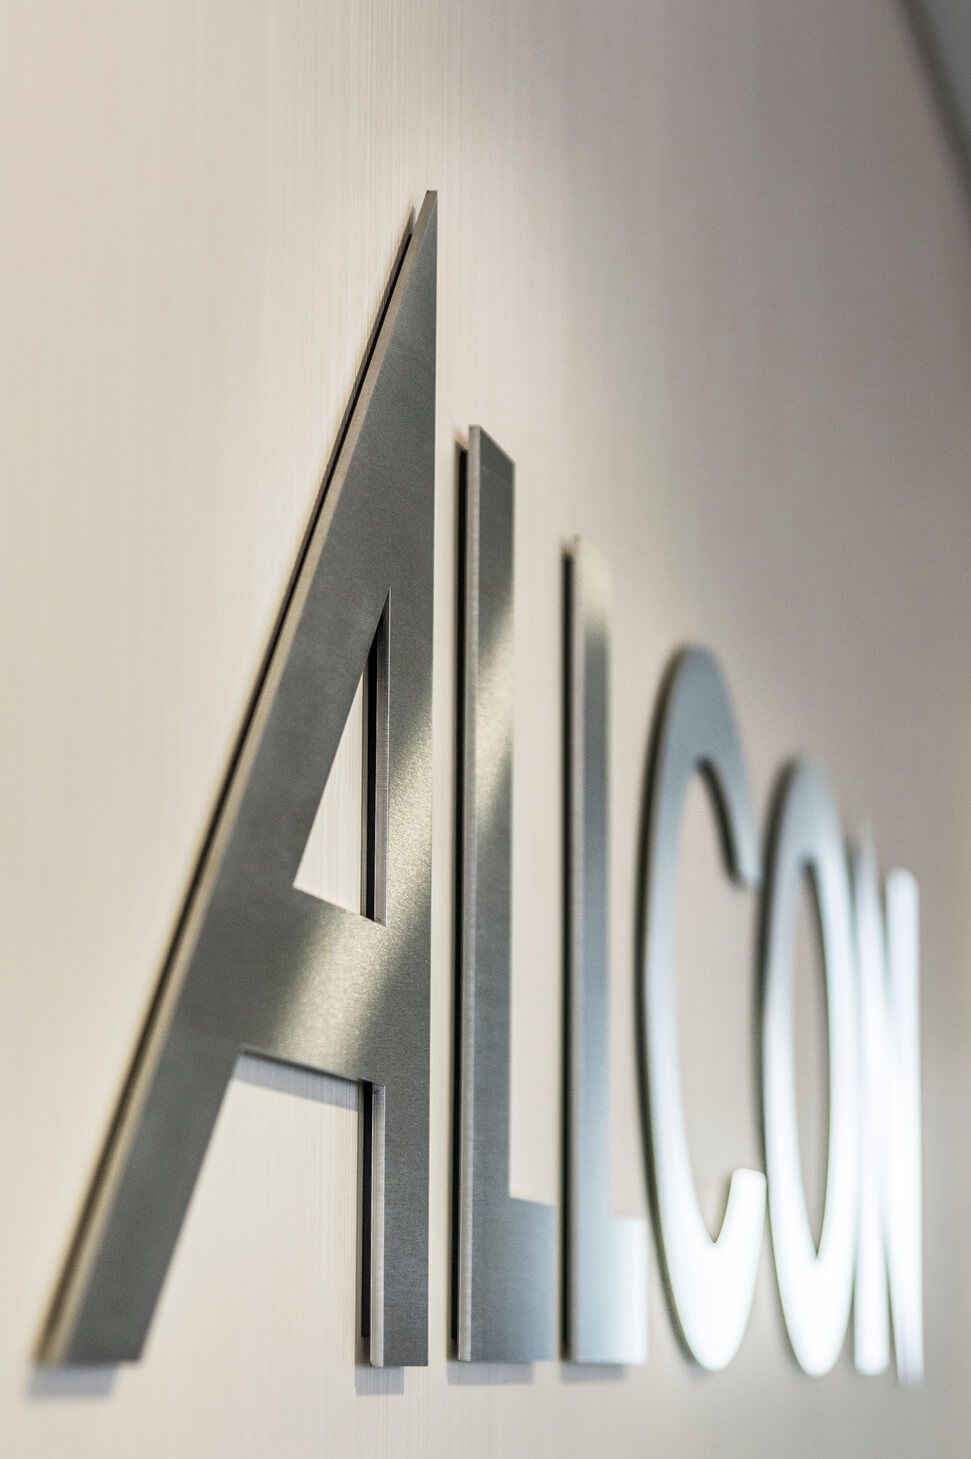 Allcon - Allcon - spatial metal letters